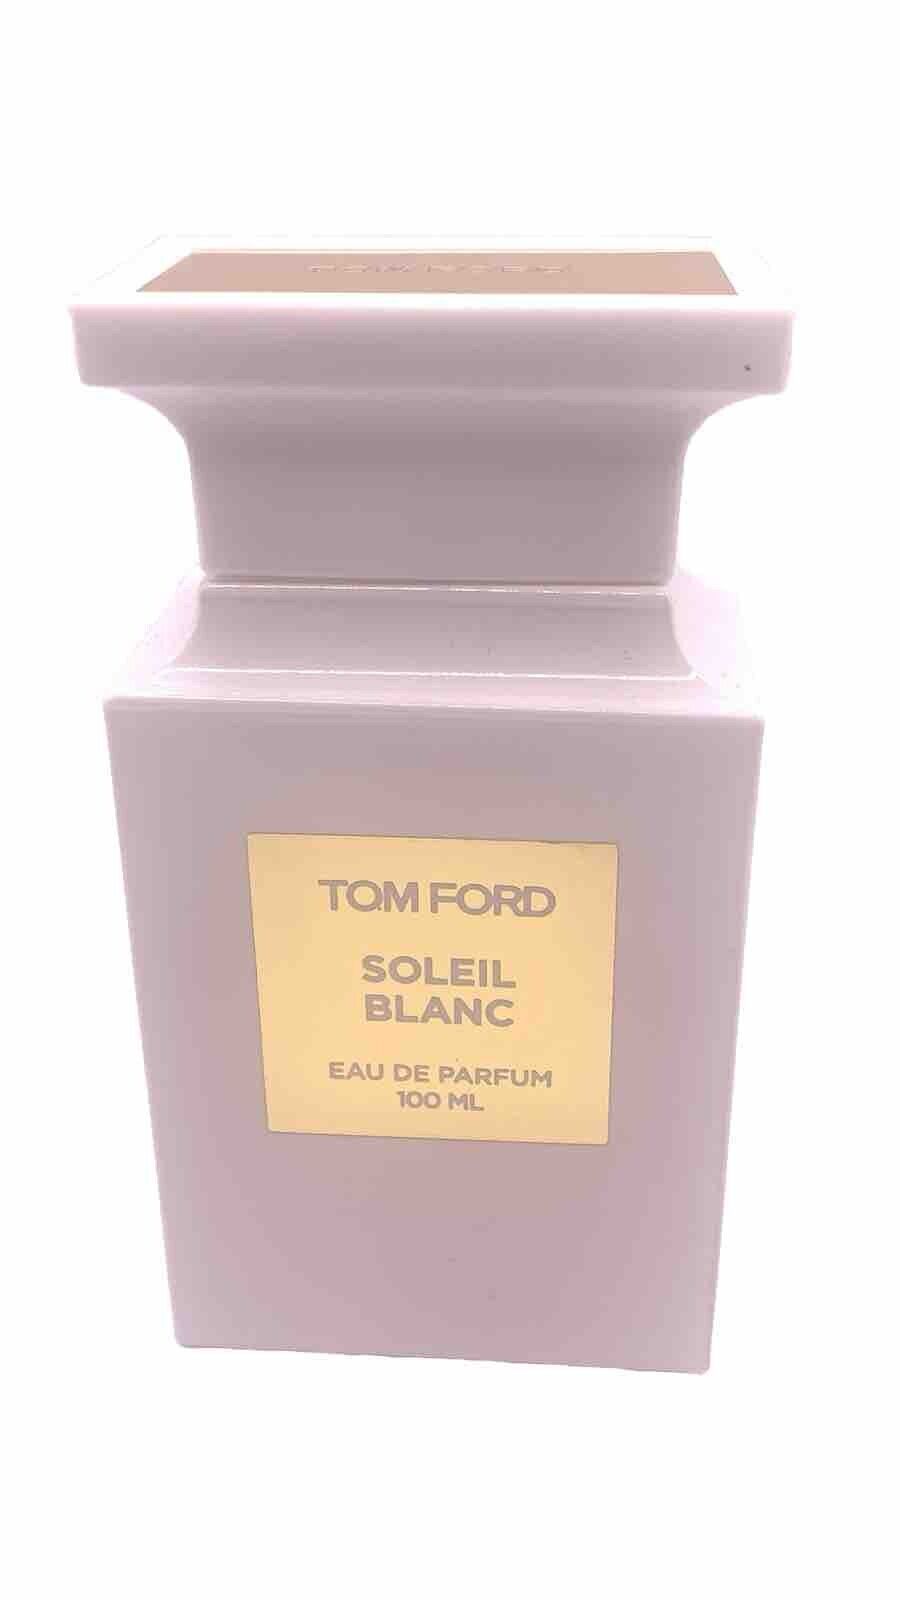 TOM FORD Soleil Blanc Eau de Parfum - 3.4oz 100ml.  No Box.  See Level 60% Full